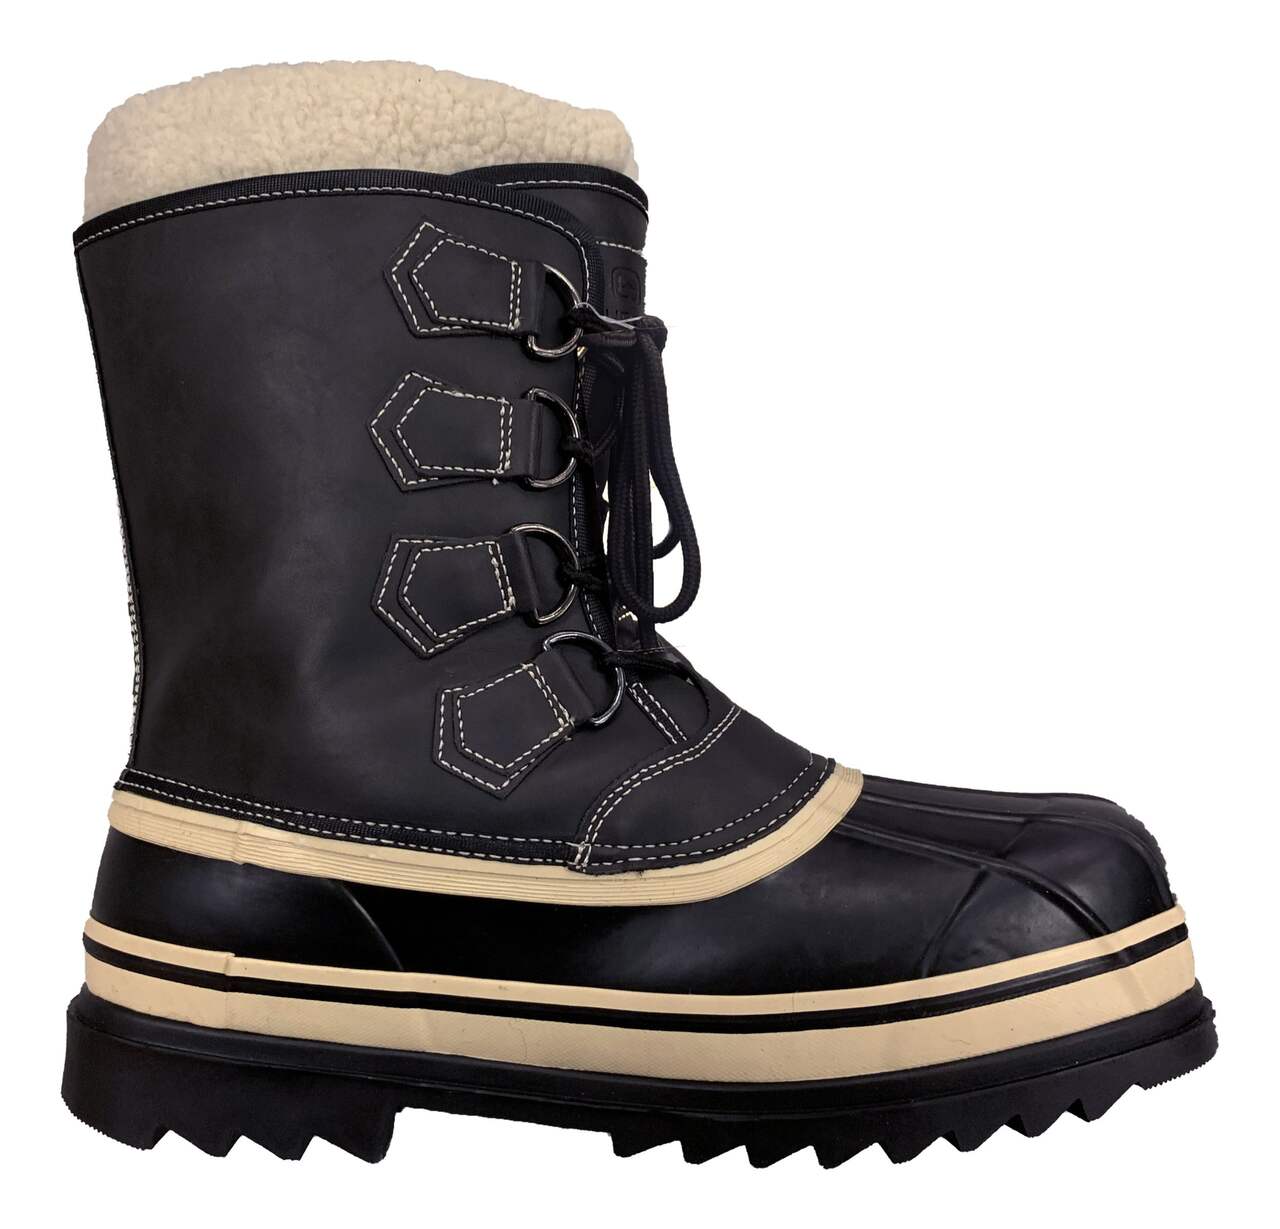 https://media-www.canadiantire.ca/product/playing/footwear-apparel/winter-footwear-apparel/1873086/outbound-men-s-cascade-boot-13-f0aee969-61b8-4bd4-b403-cb74cfaf4ebb-jpgrendition.jpg?imdensity=1&imwidth=640&impolicy=mZoom